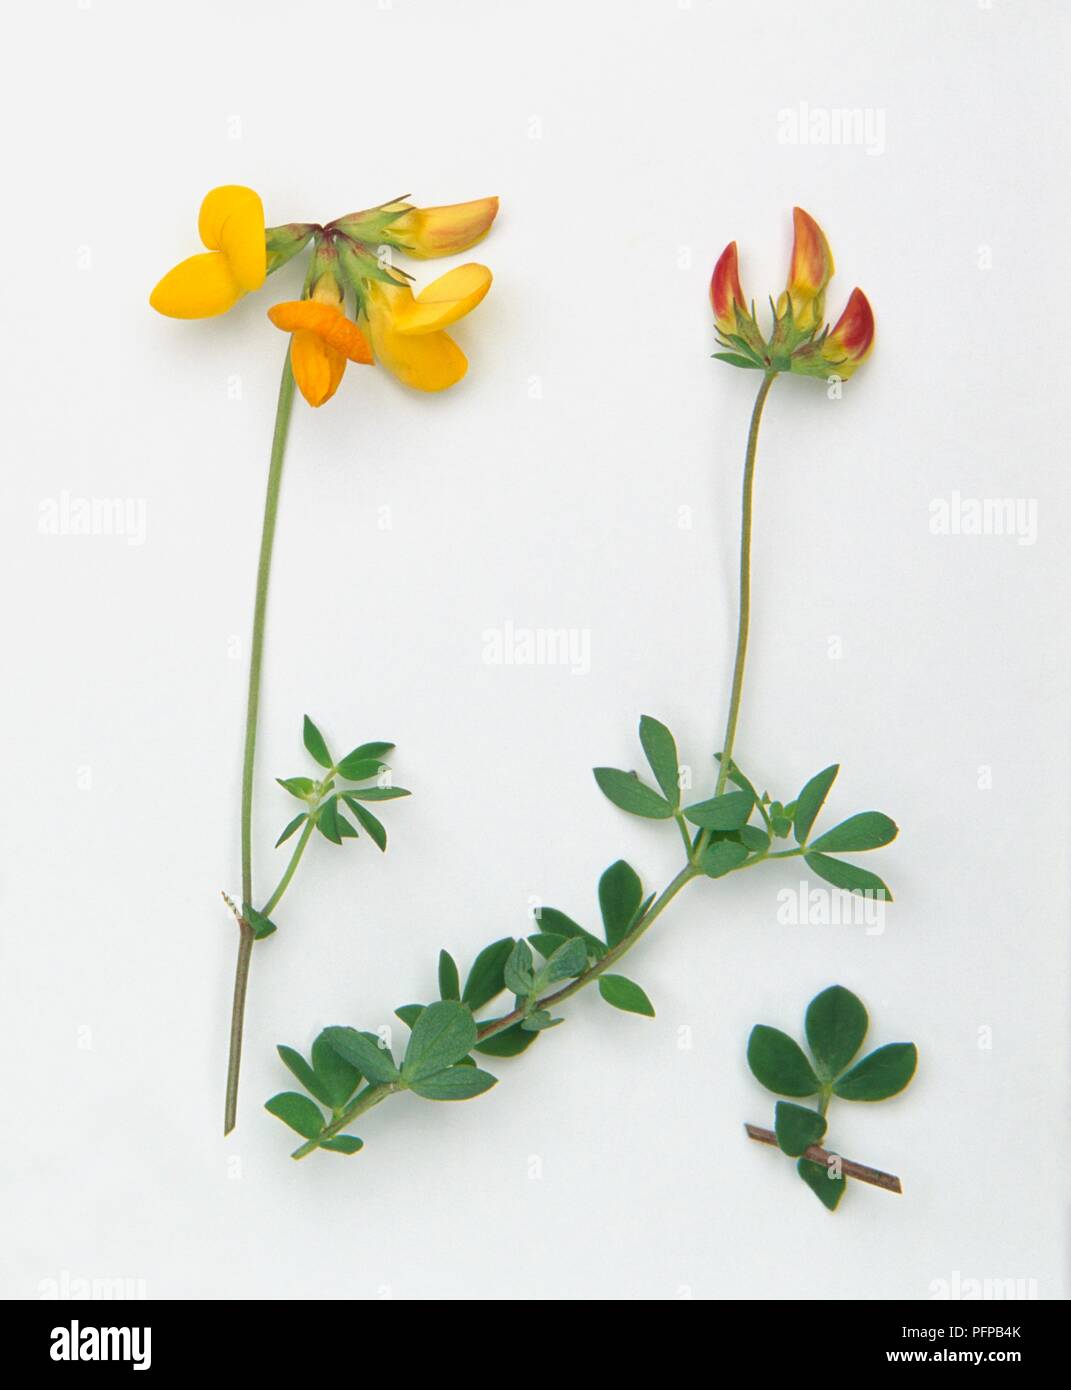 Lotus Flower Stems, 4ct.